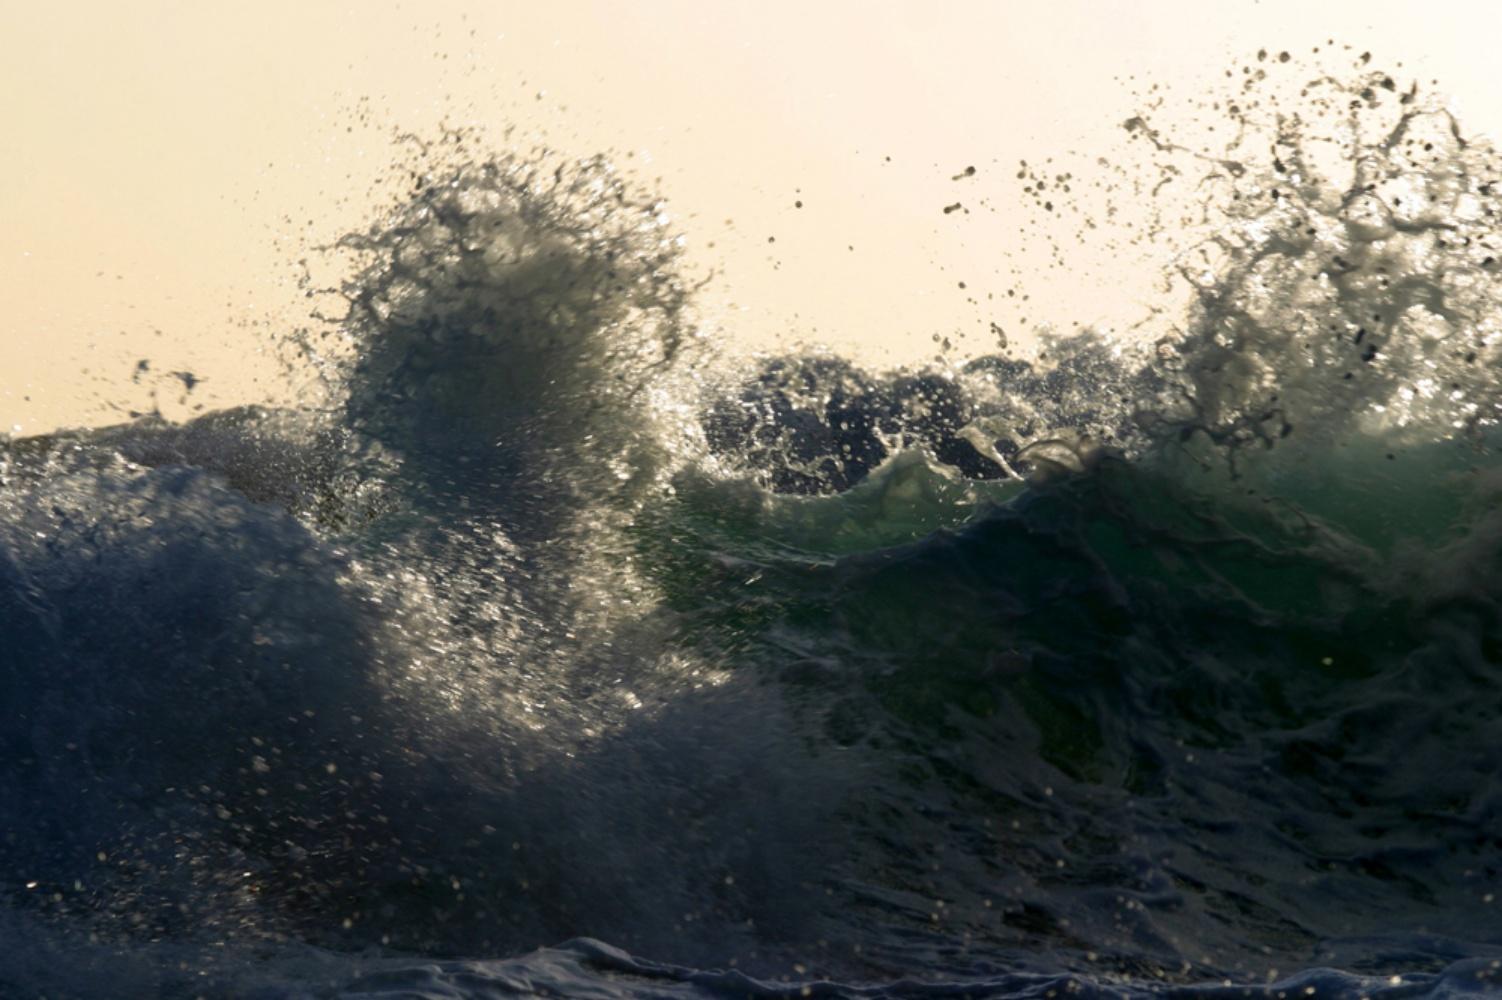 NAMI_025 – Syoin Kajii, Japanese Photography, Ocean, Waves, Water, Nature, Art